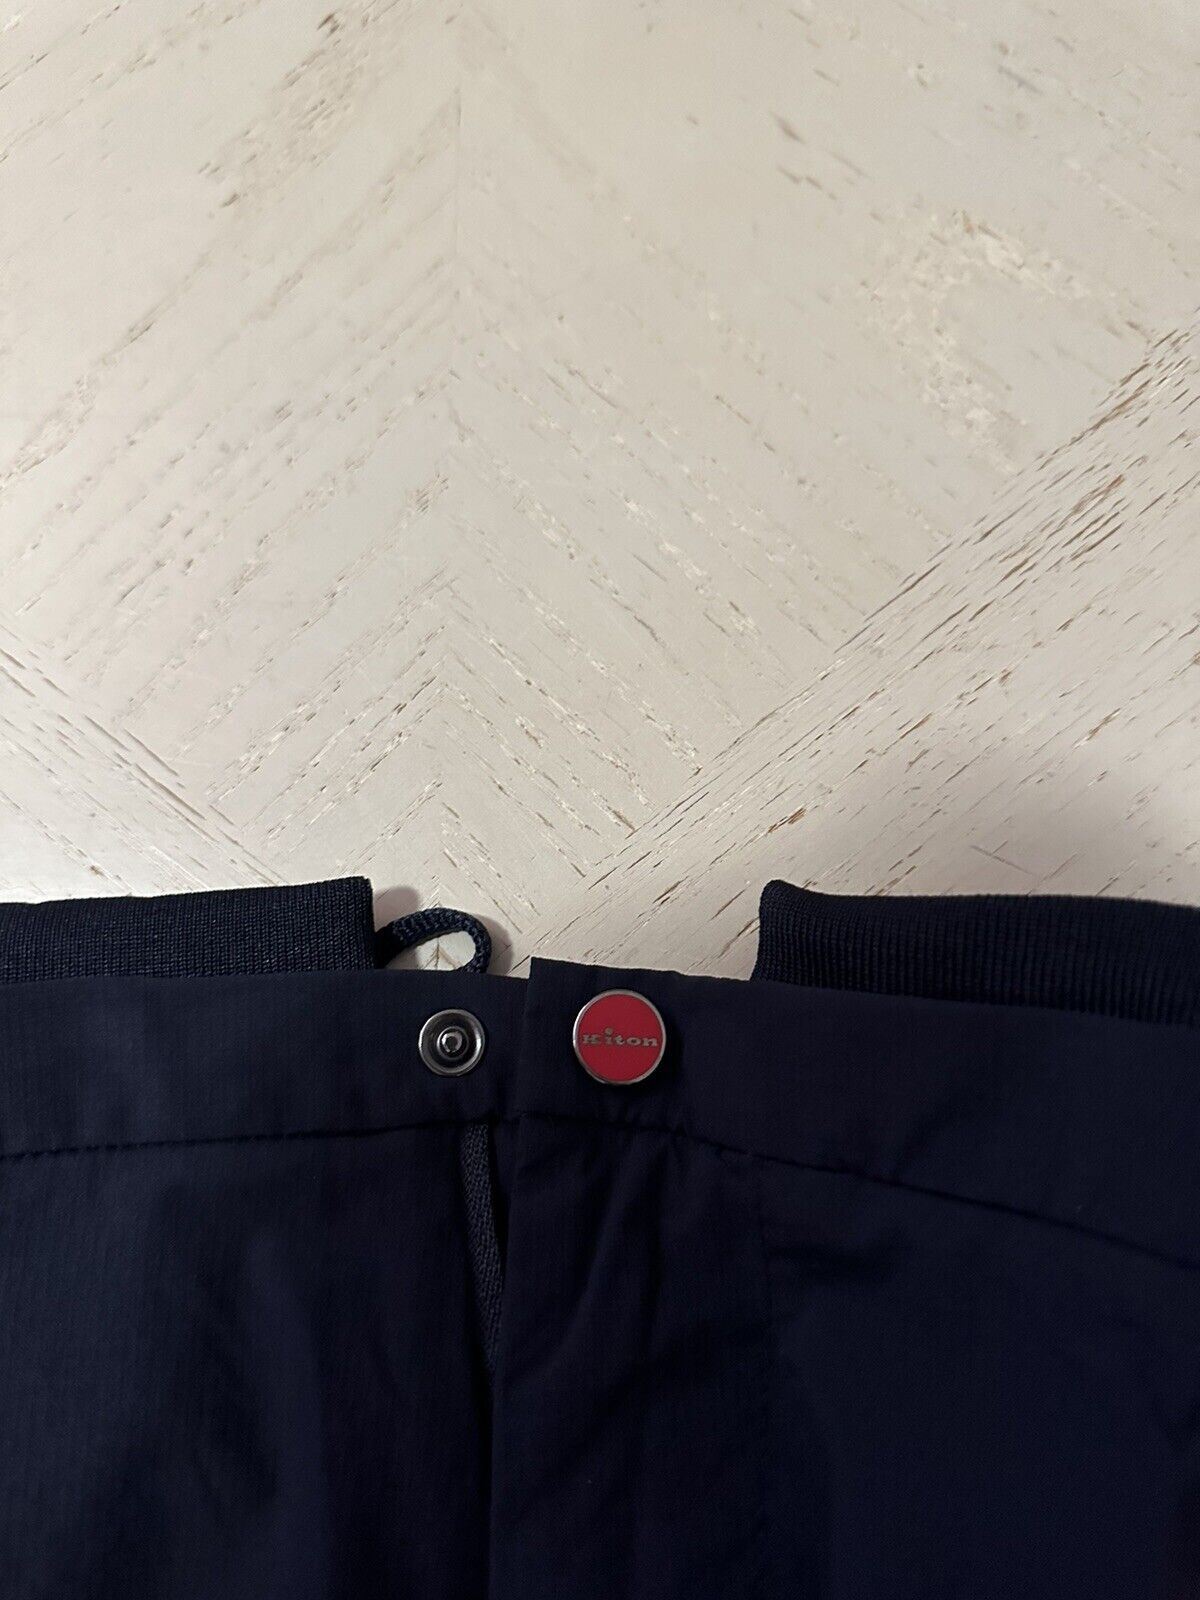 Neu mit Etikett: 1395 $ Kiton Herren-Nylon-Shorts, Farbe Marineblau, Größe 40 US/56 EU, Italien